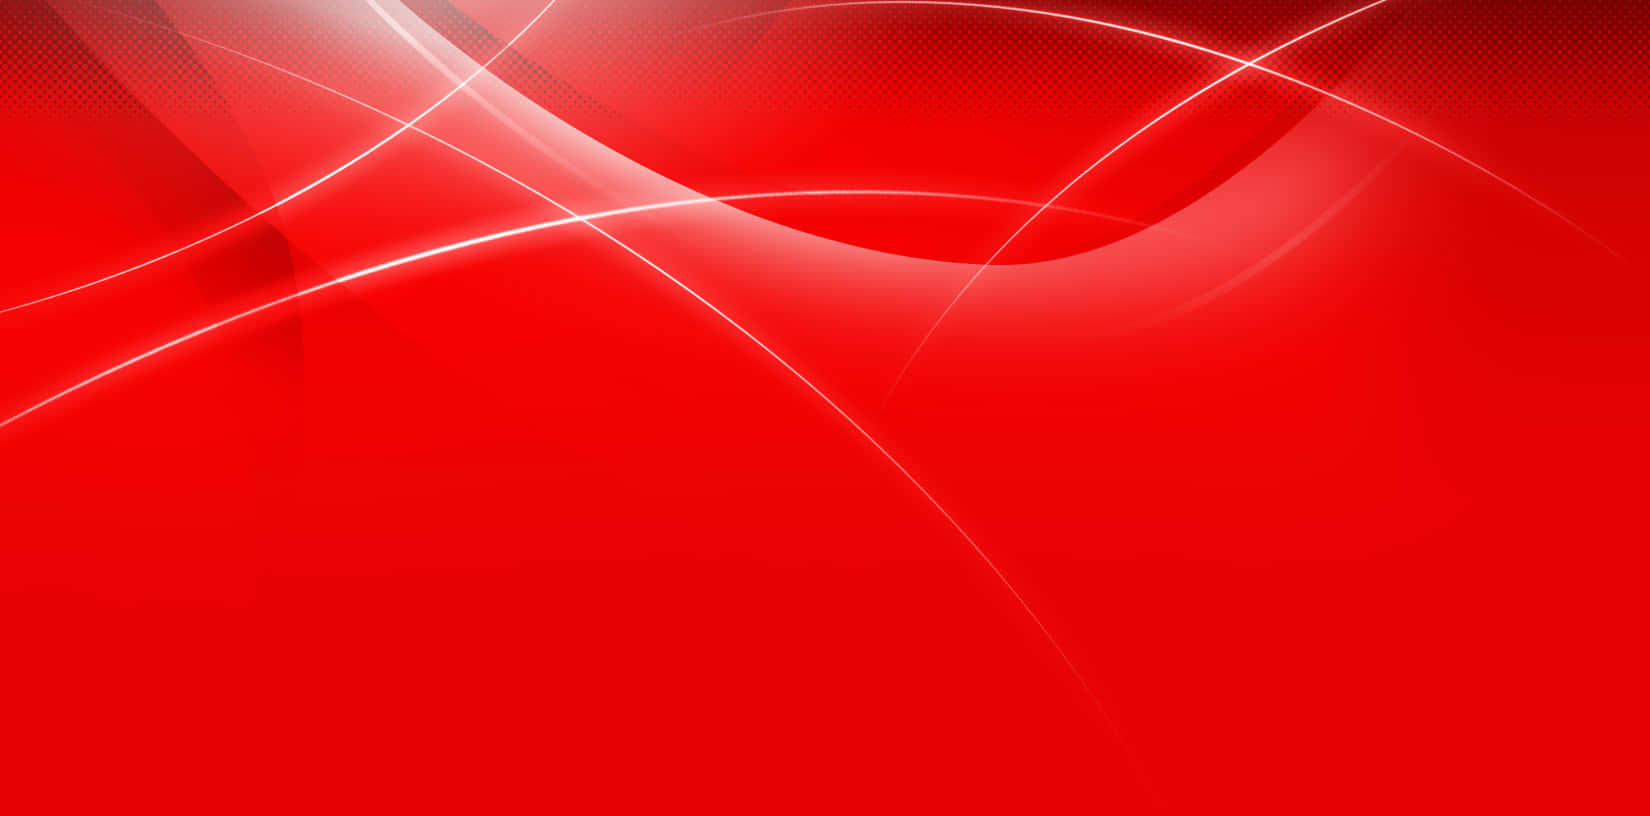 Brilliant Red Background